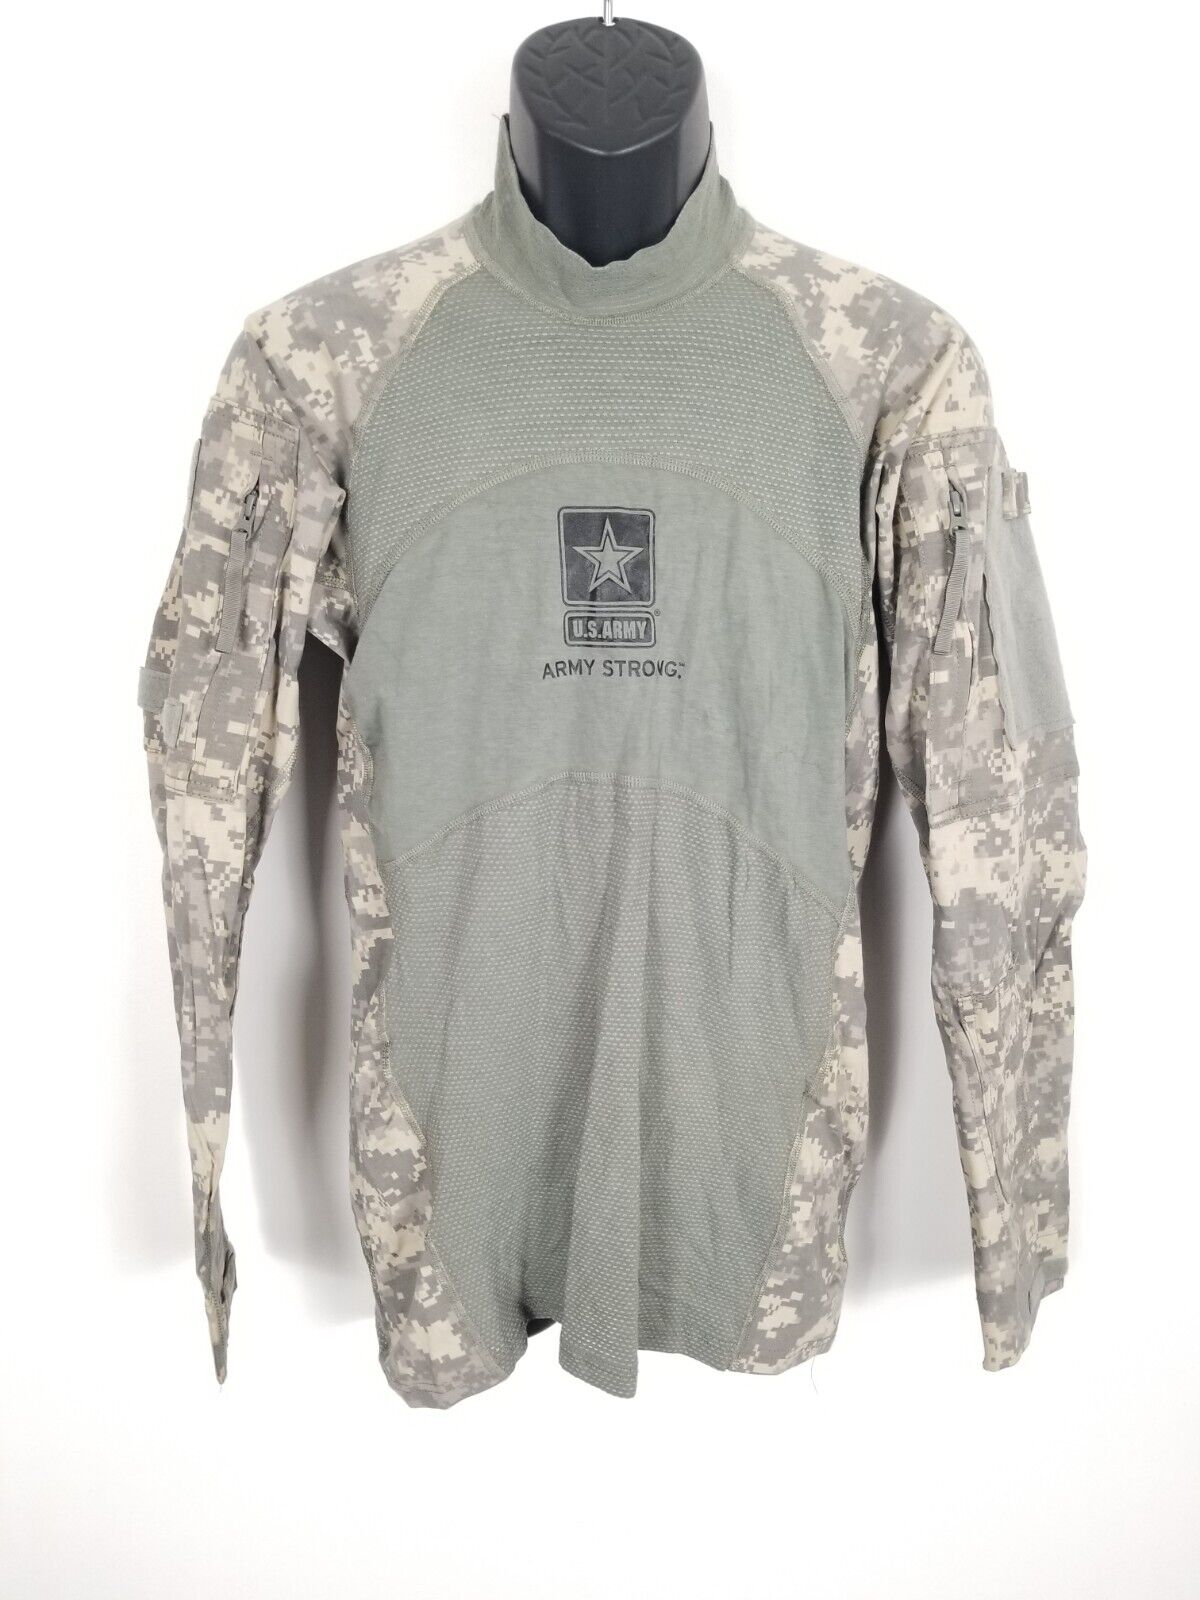 USGI Army ACU Camouflage MASSIF Flame Resistant Army Combat Shirt ACS Sz Medium